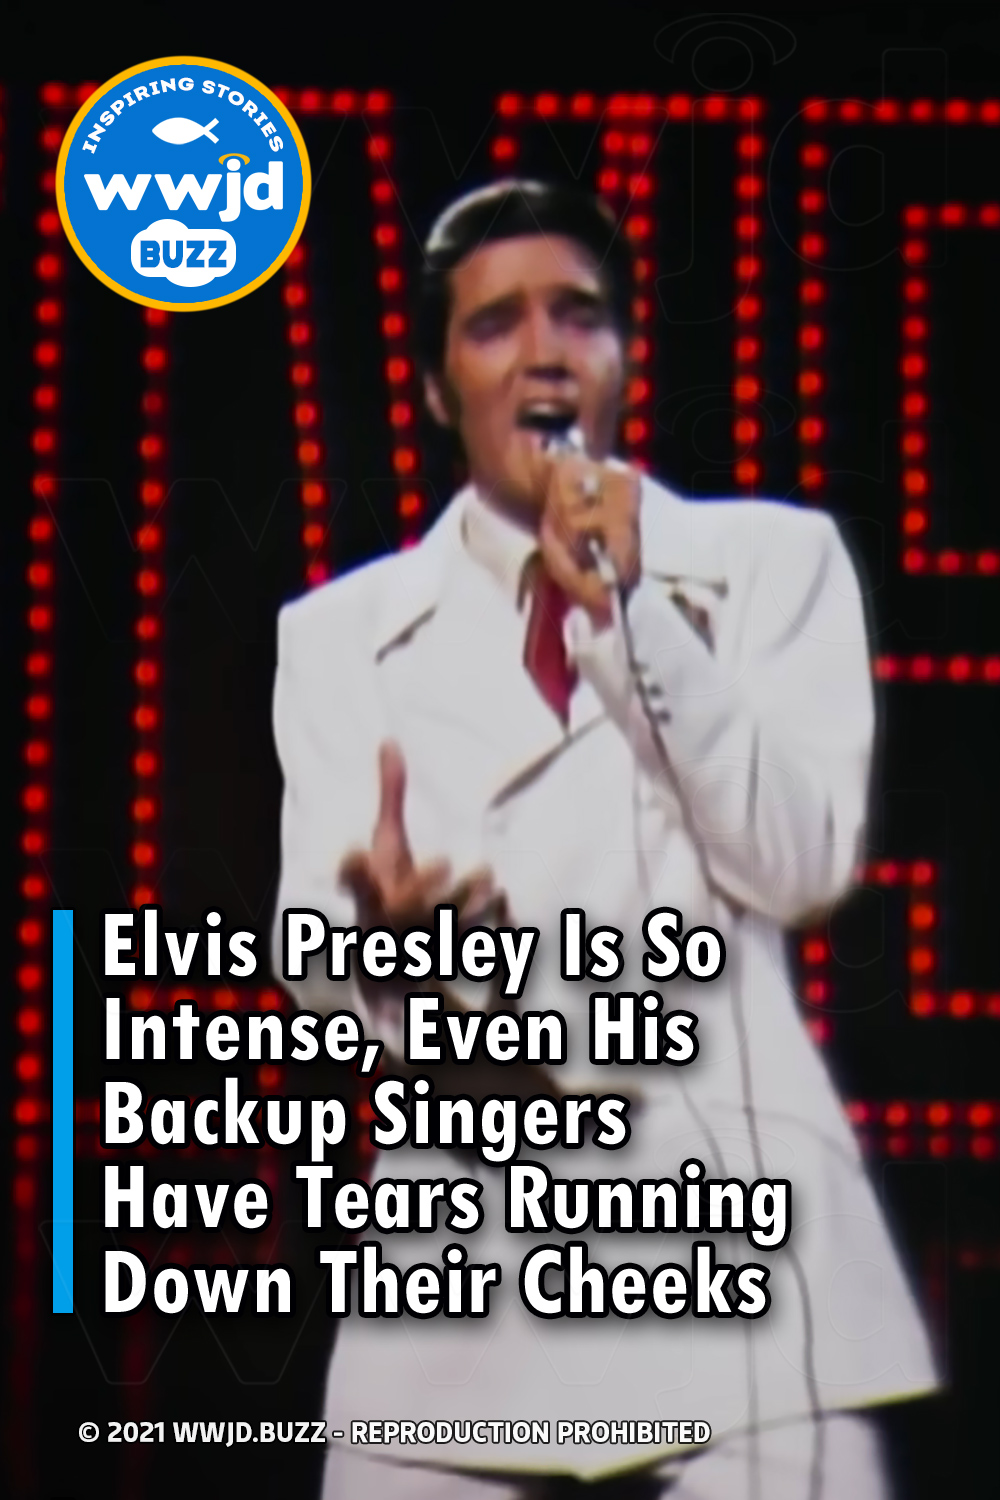 Elvis Presley Is So Intense, Even His Backup Singers Have Tears Running Down Their Cheeks